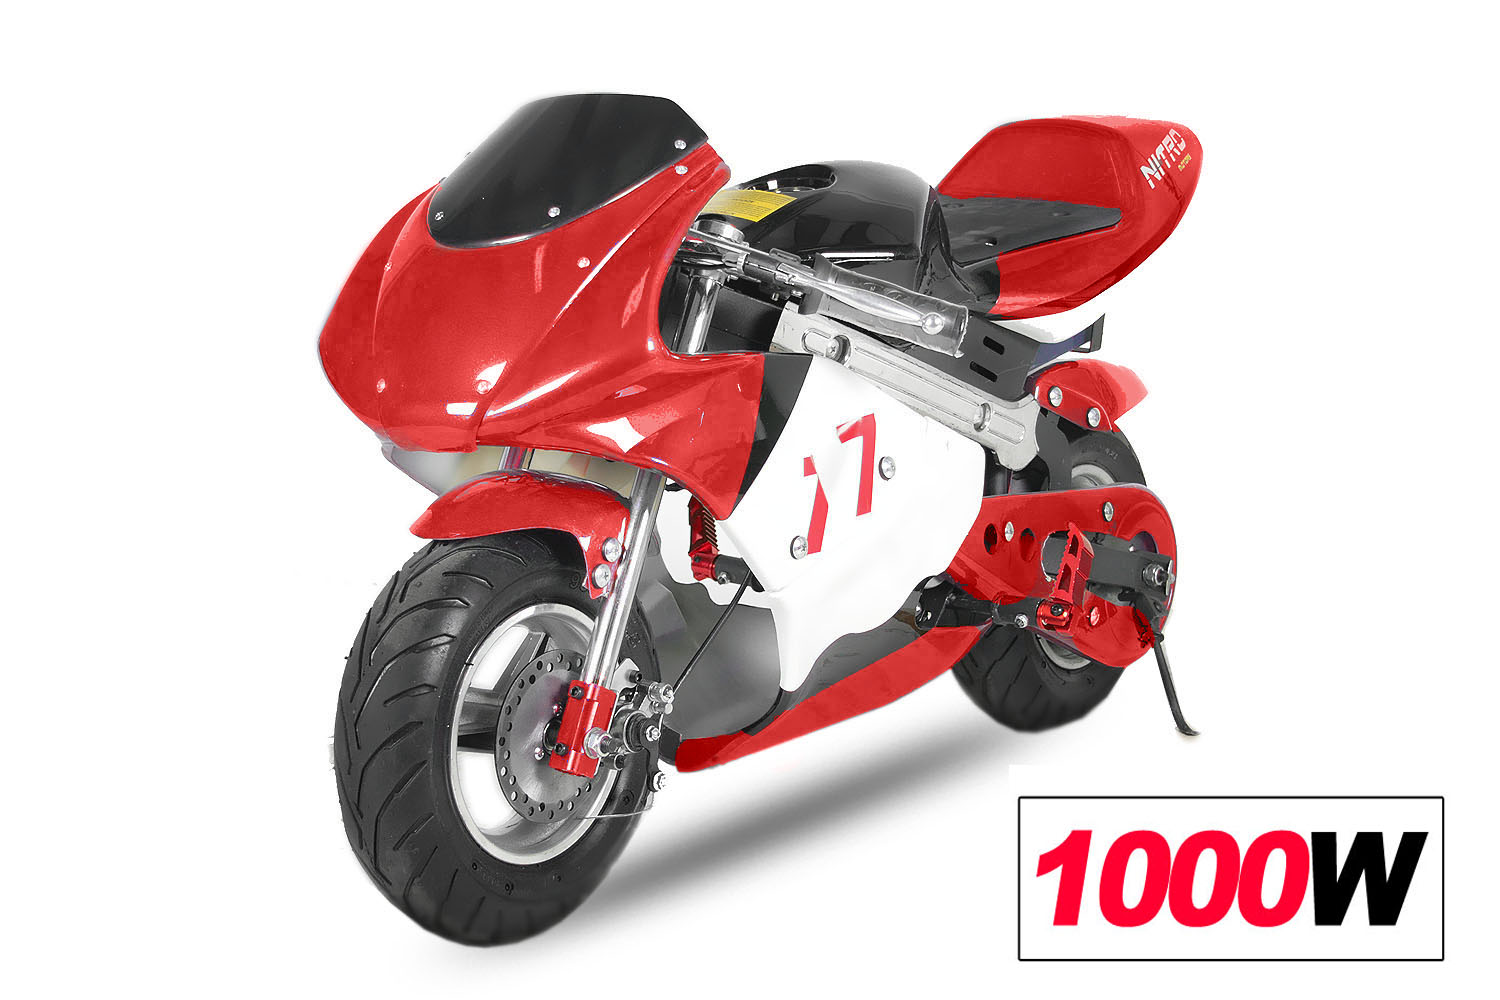 Nitro Motors 1000W Elektro Pocketbike Mini Cross Minibike Racing Pocket